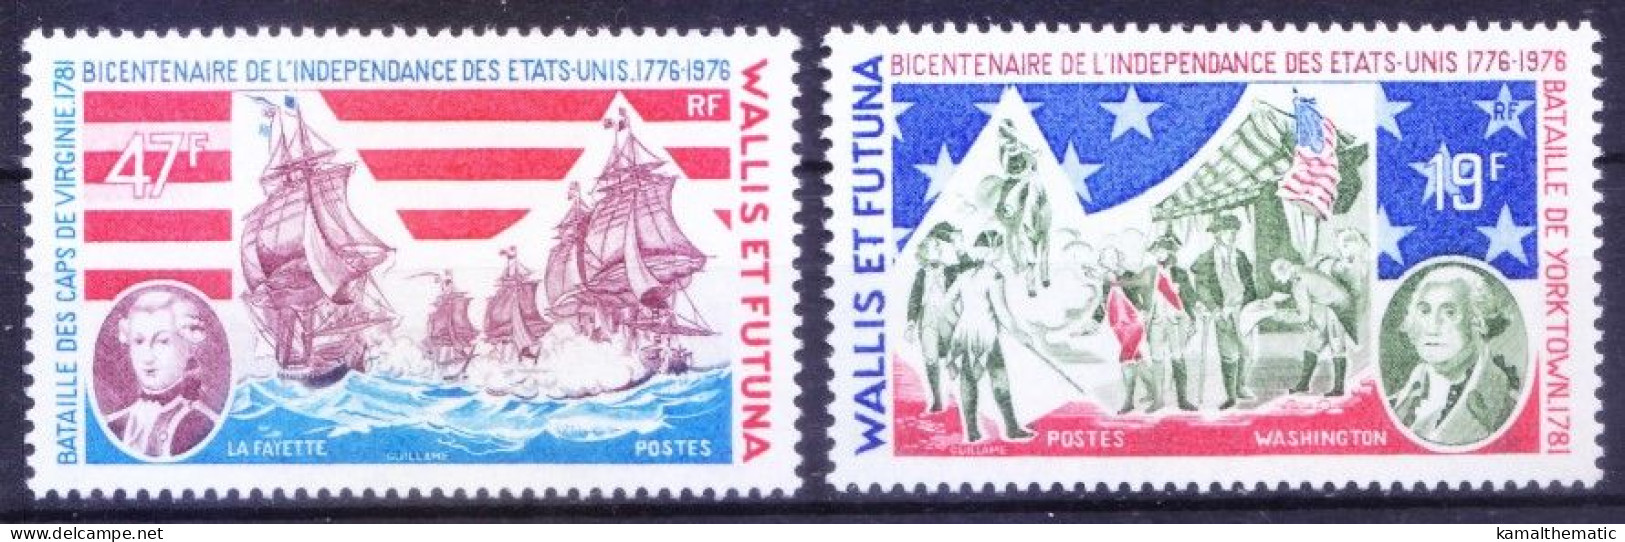 Wallis And Futuna 196 MNH 2v, Bicentenary Of Independence Of United States - Onafhankelijkheid USA